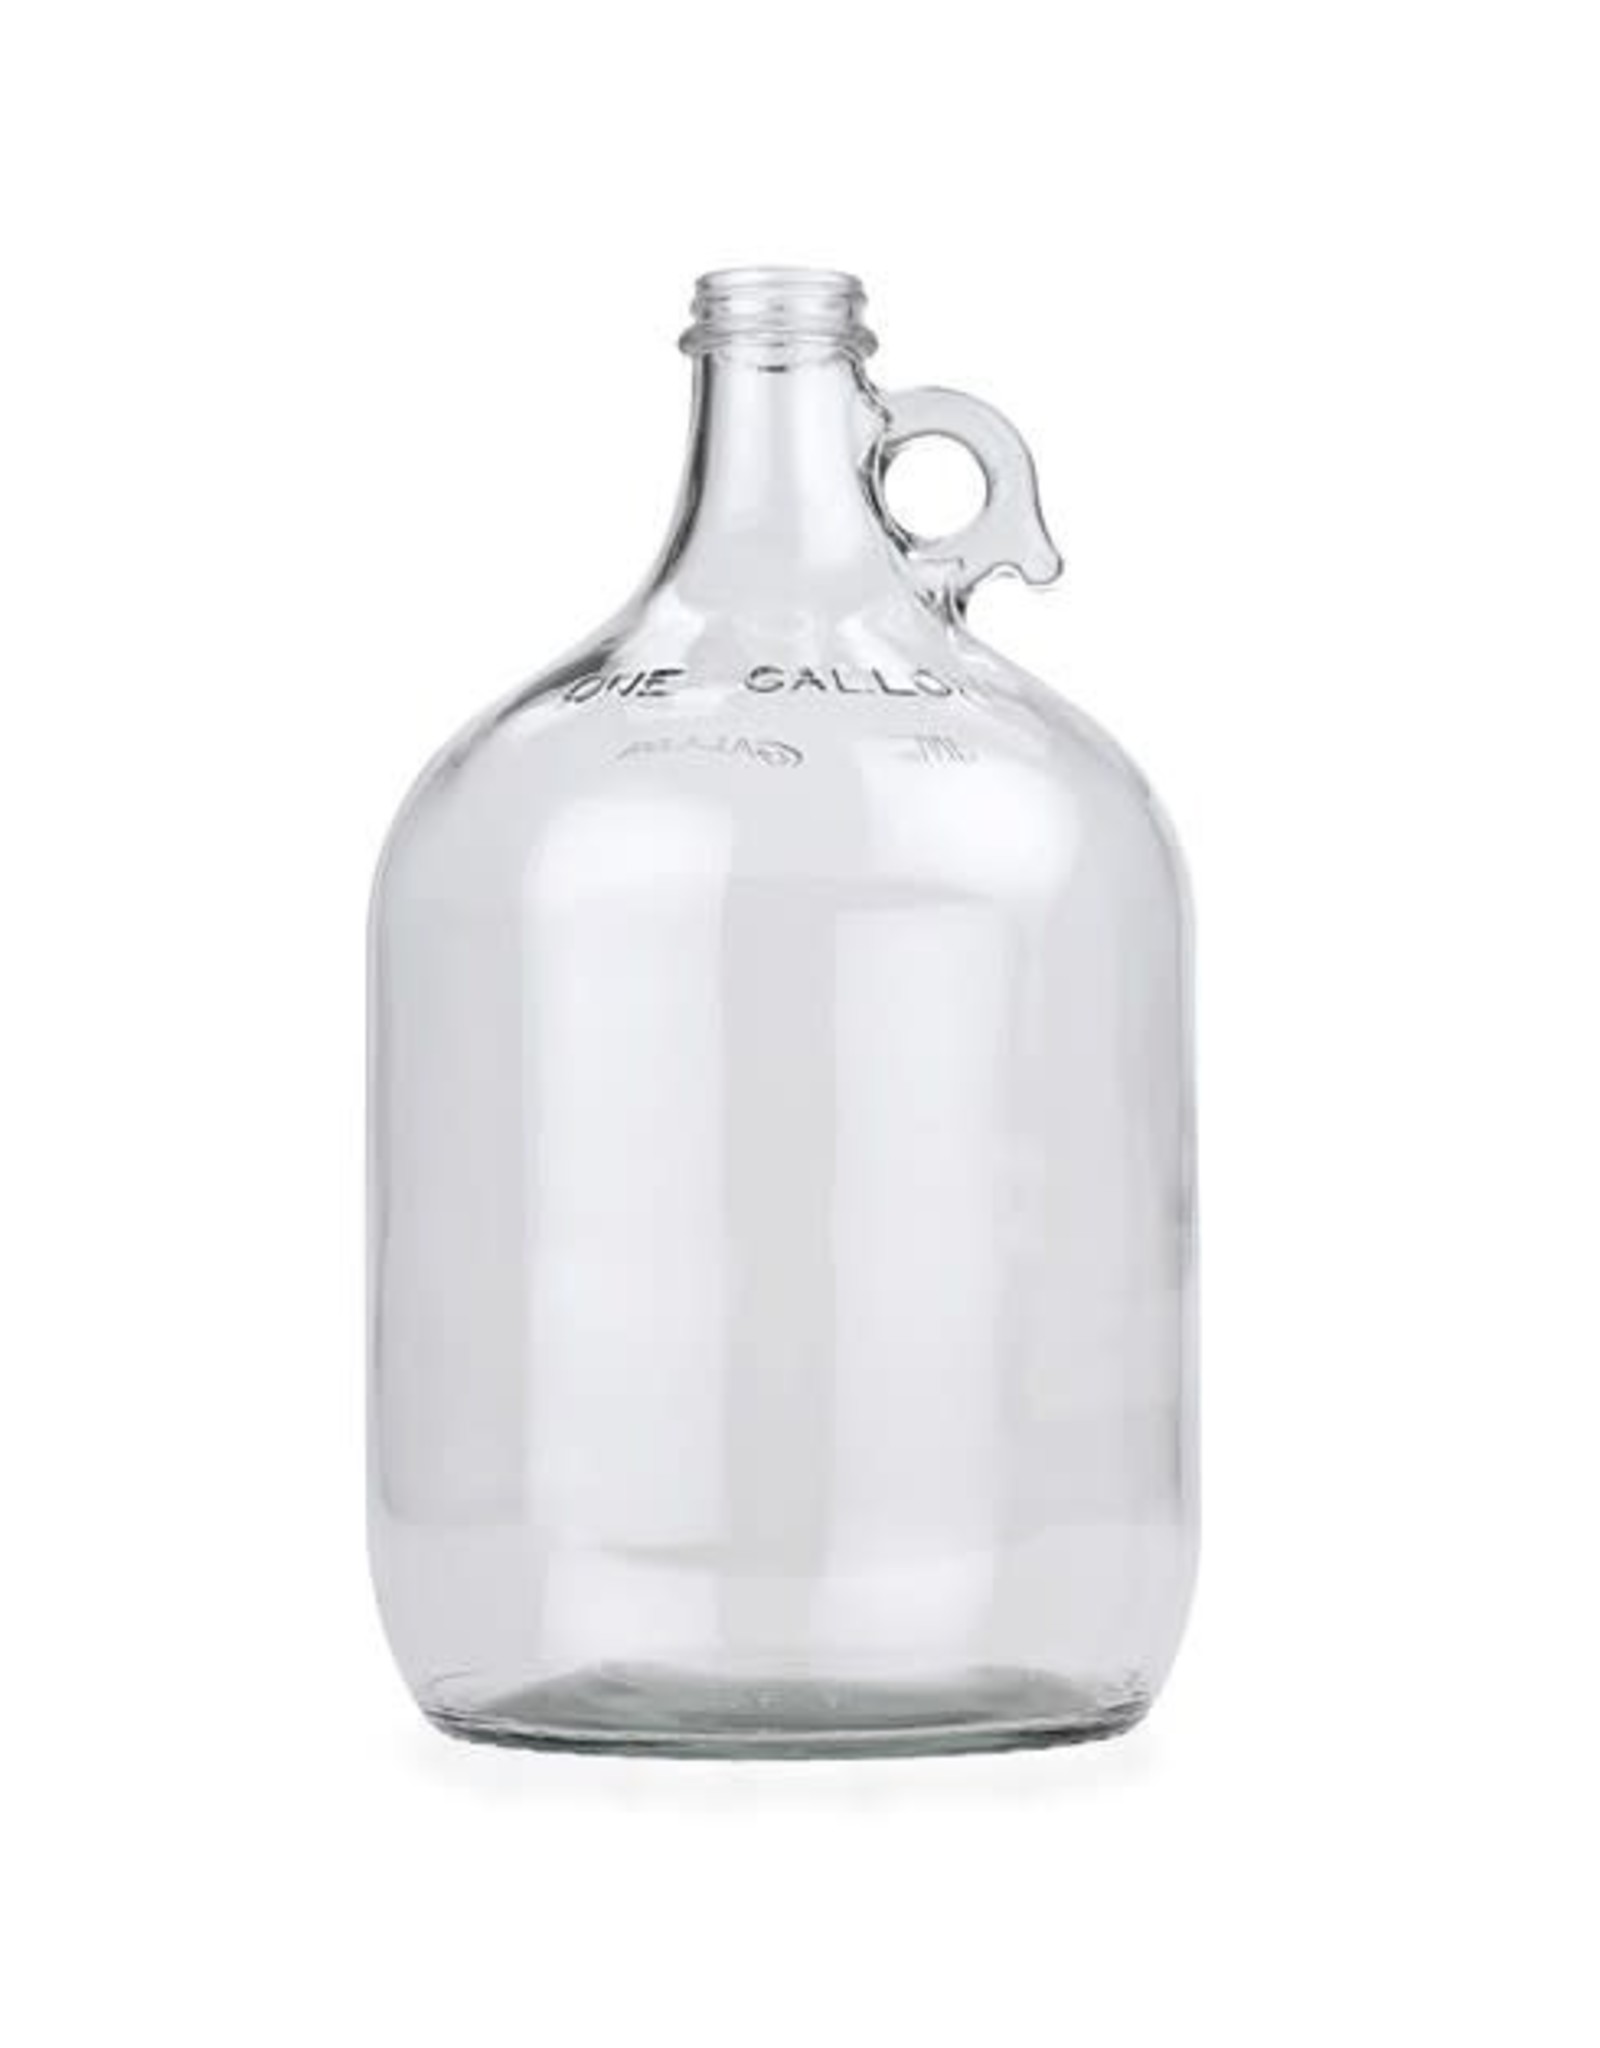 https://cdn.shoplightspeed.com/shops/609551/files/22300138/1600x2048x2/1-gallon-glass-jug-case-of-4-1gjc.jpg